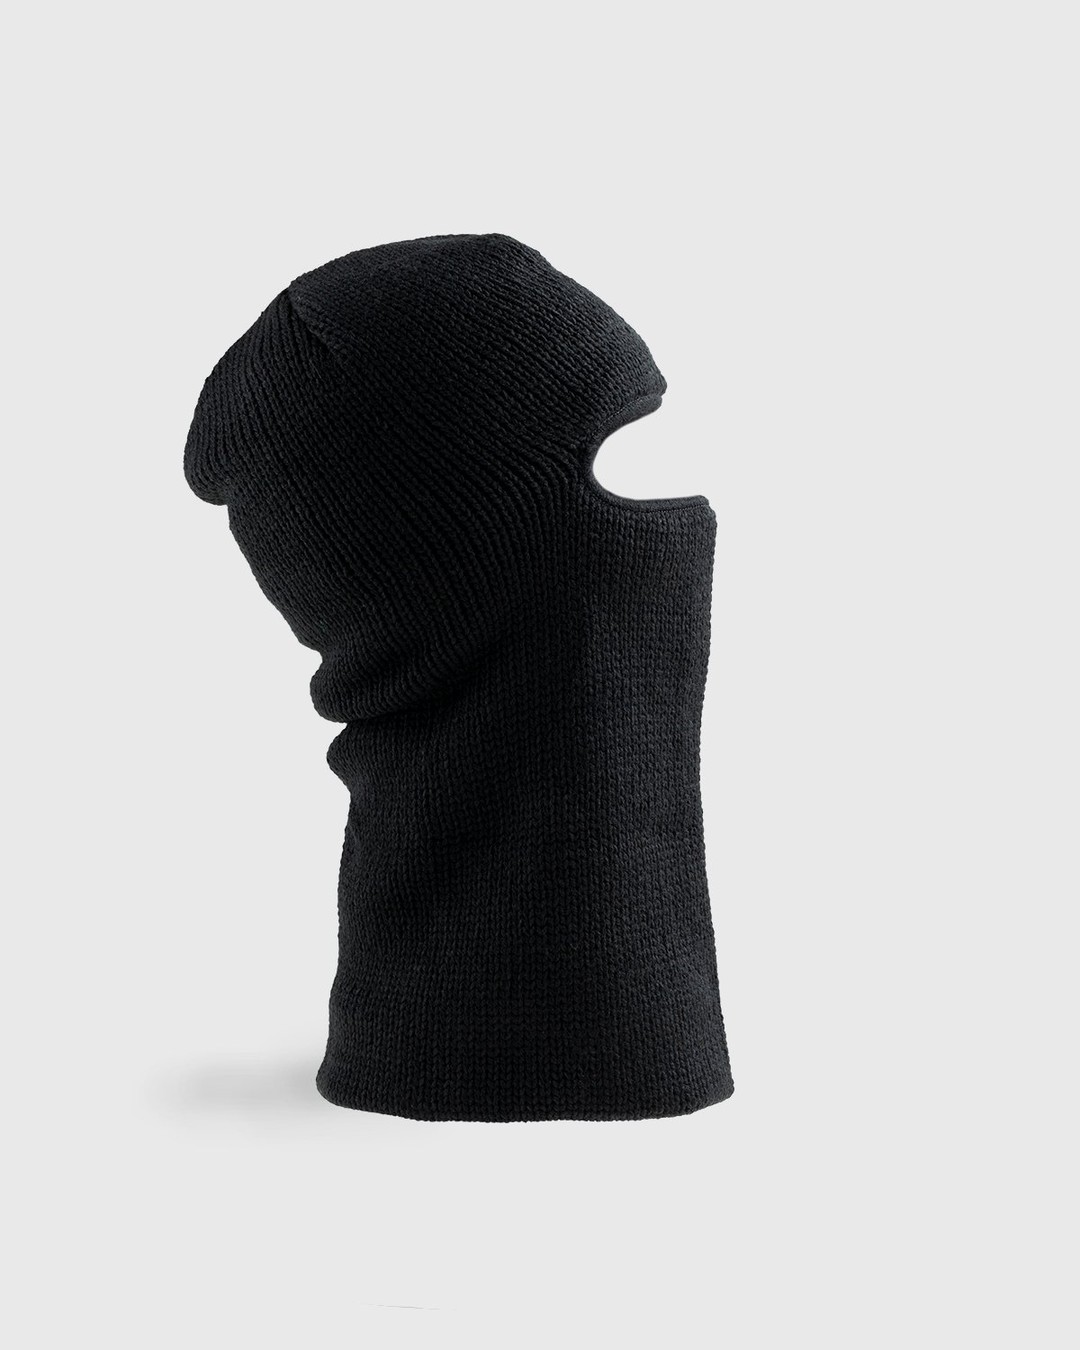 Carhartt WIP – Storm Mask Black - Balaclavas - Black - Image 3